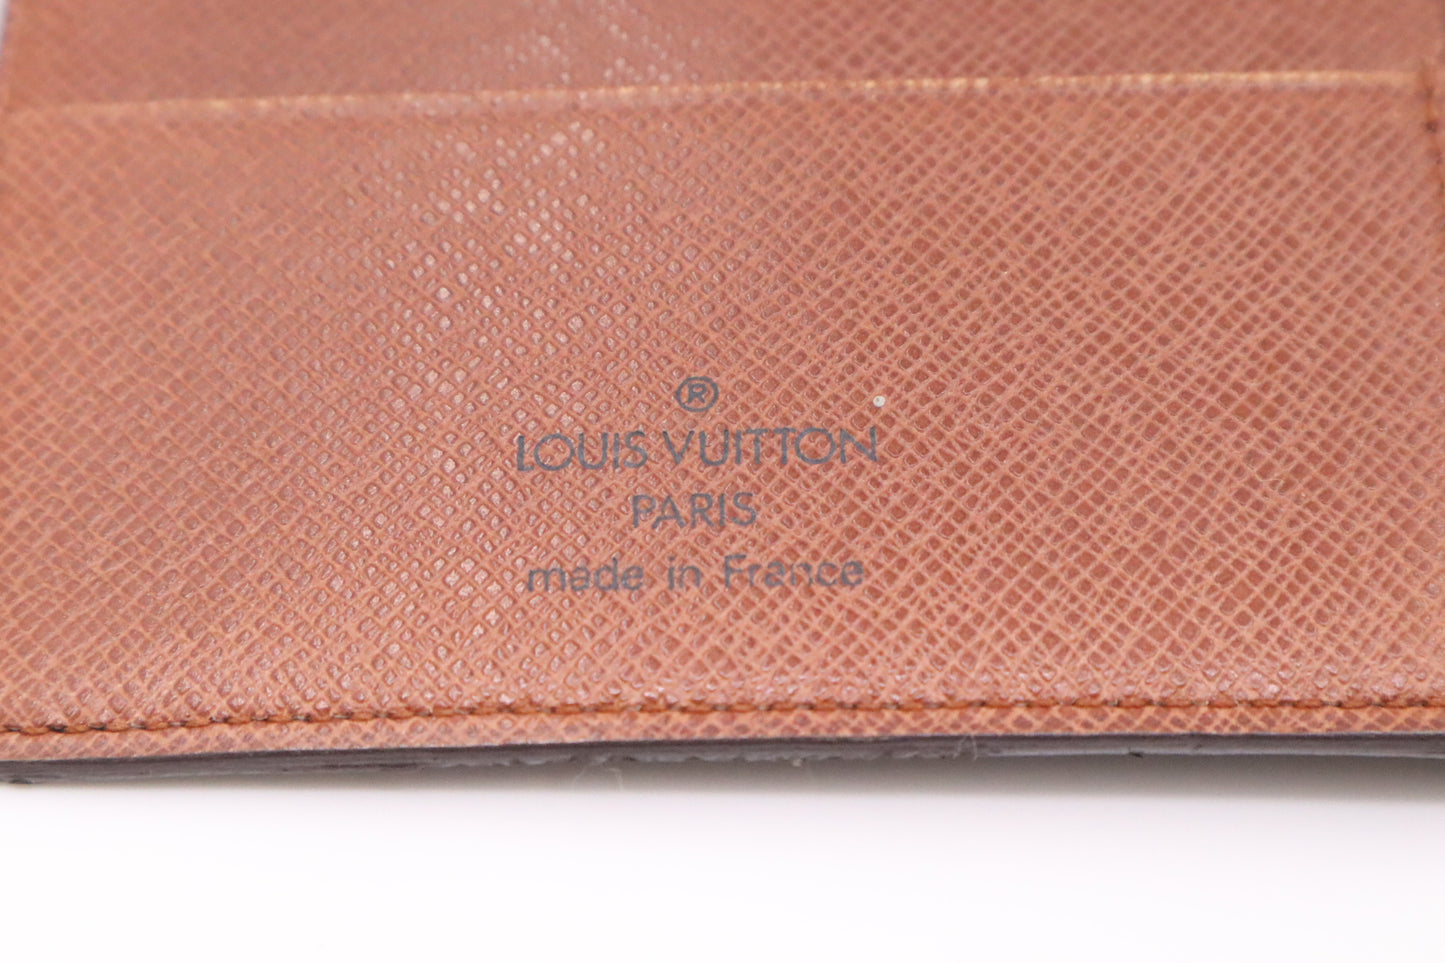 Louis Vuitton Passport Cover in Monogram Canvas